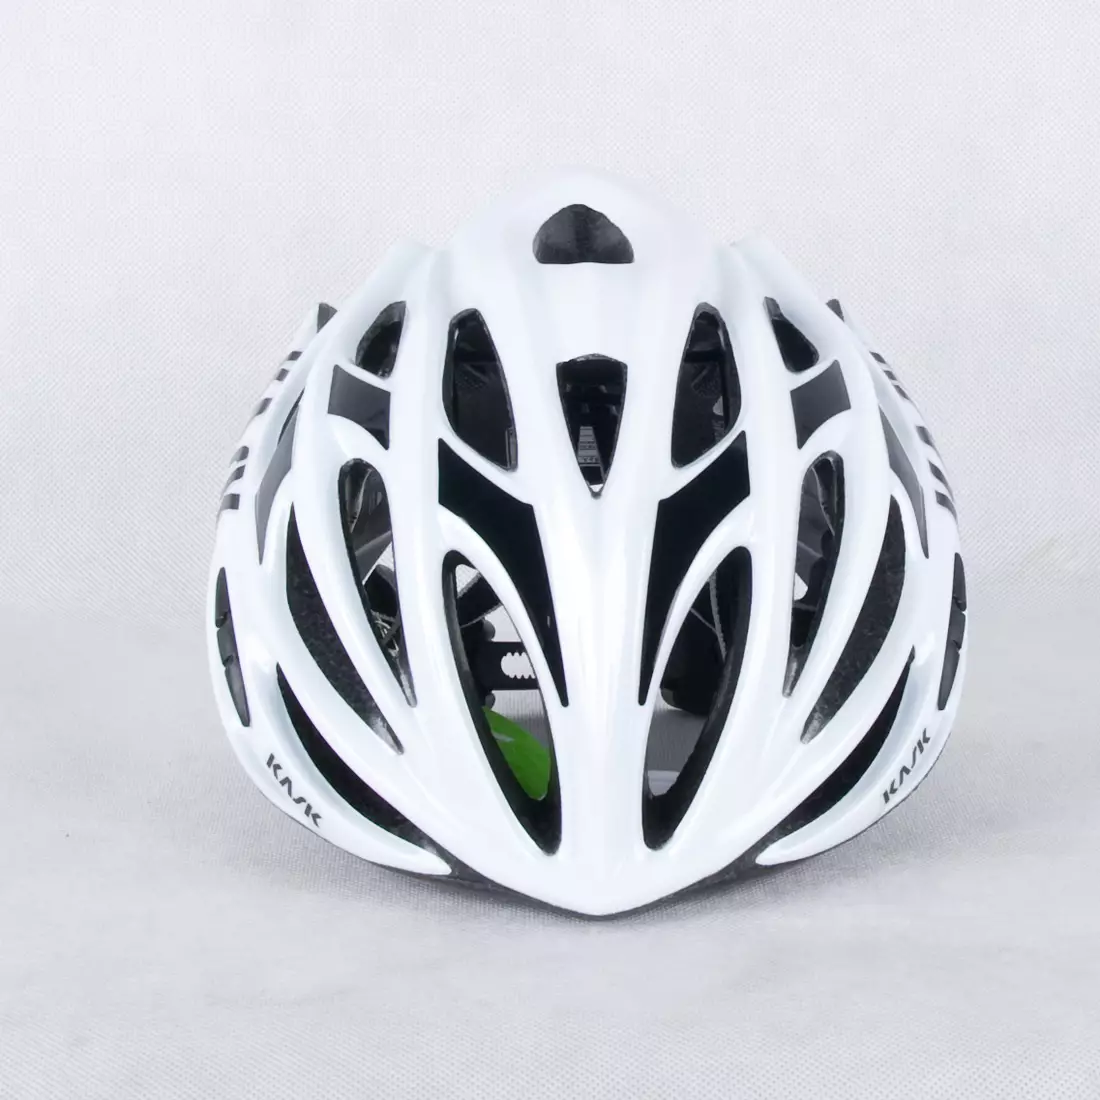 MOJITO HELMET - bicycle helmet CHE00044.205 Bianco-Nero